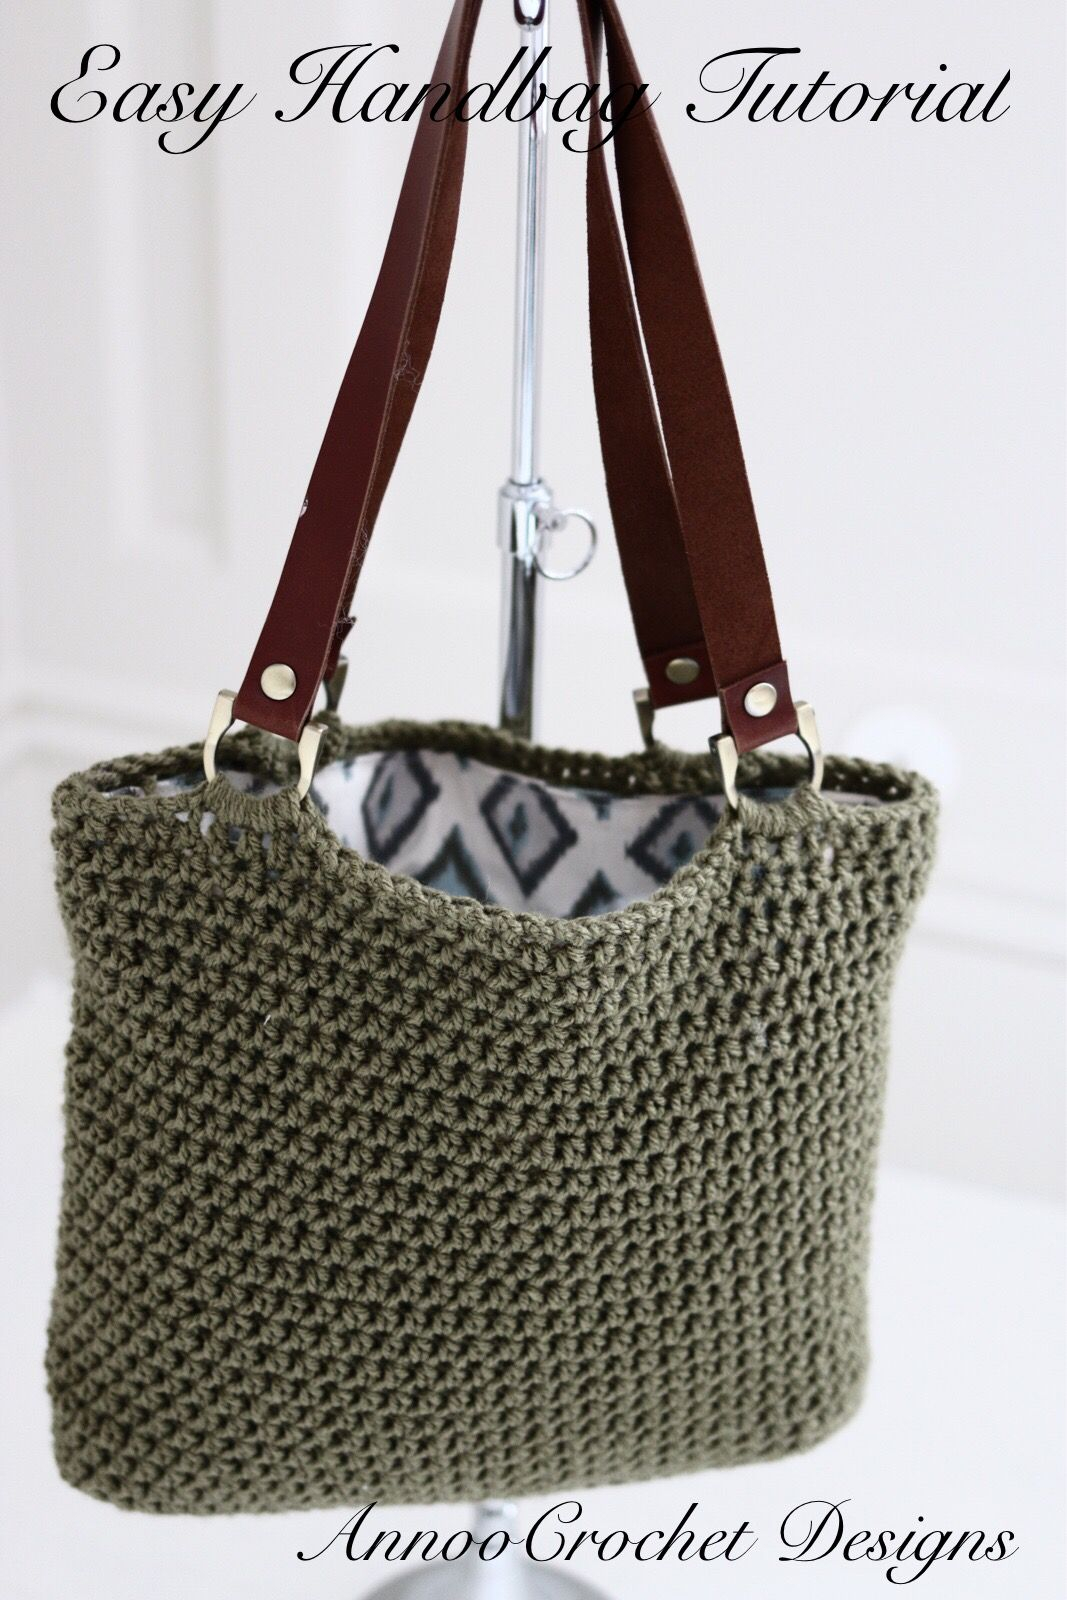 Designer Crochet Bag Patterns Pin Nk On Crochet Bags Pinterest Crochet Handbags Crochet